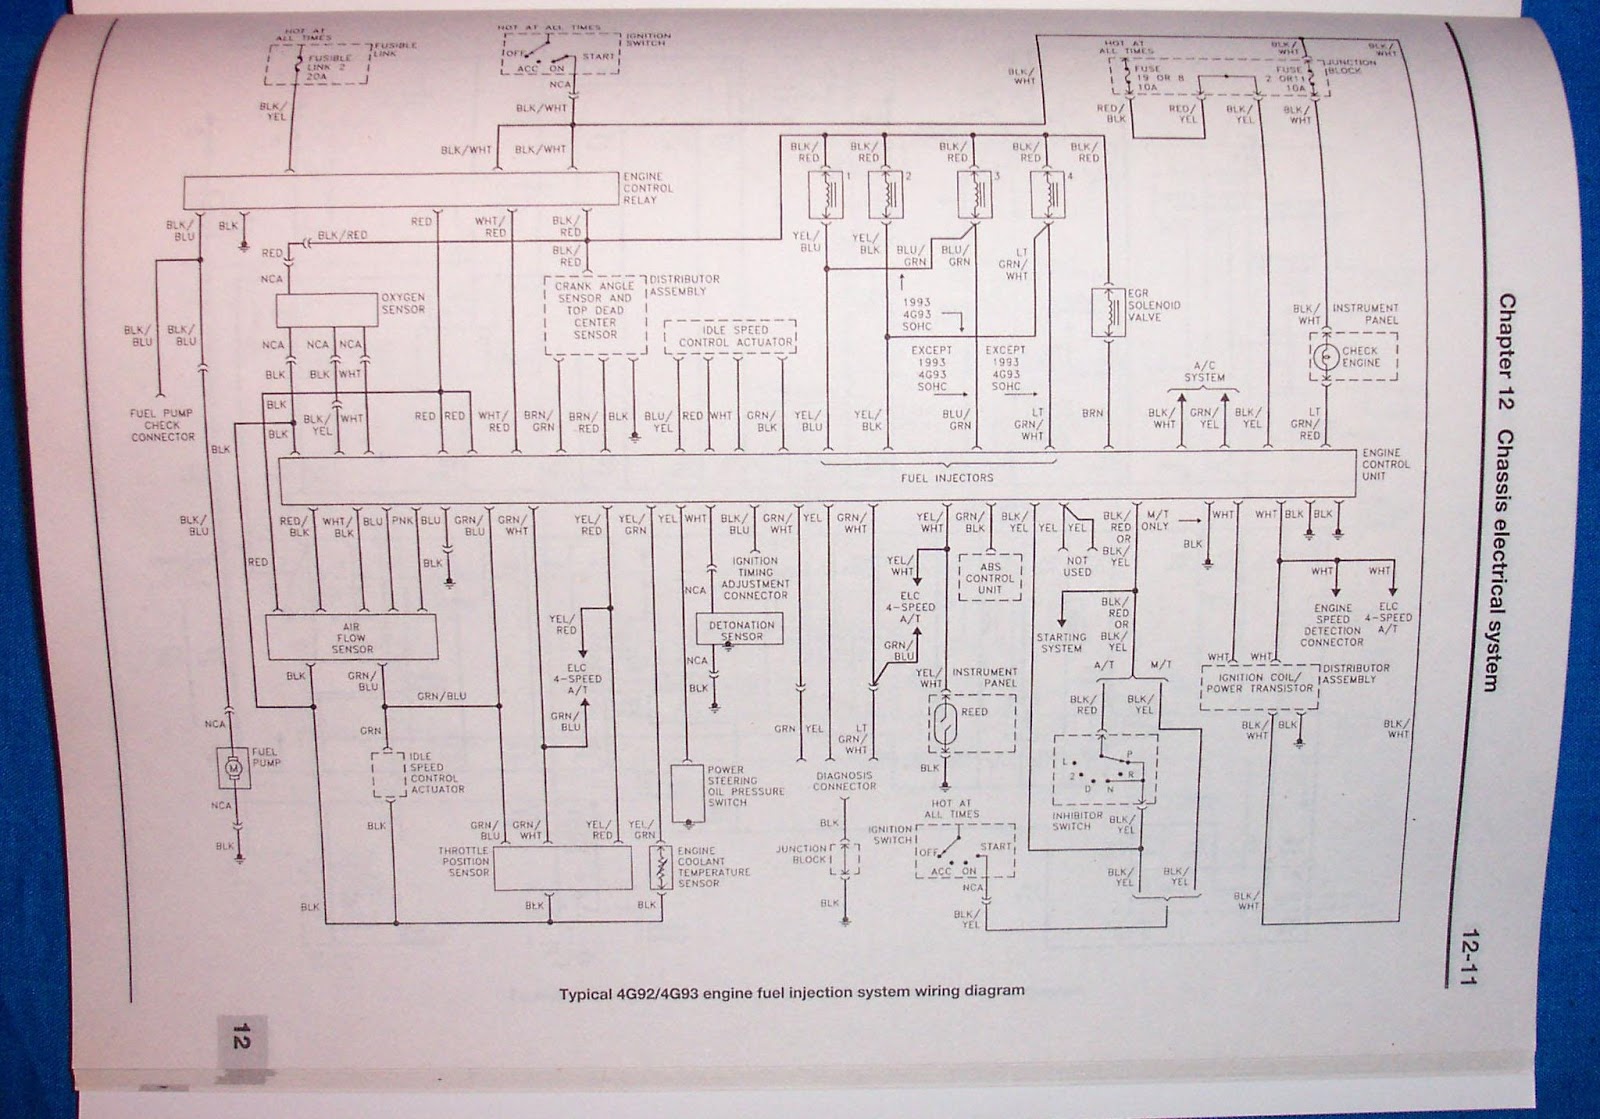 4g92 4G93 ecu wiring diagram